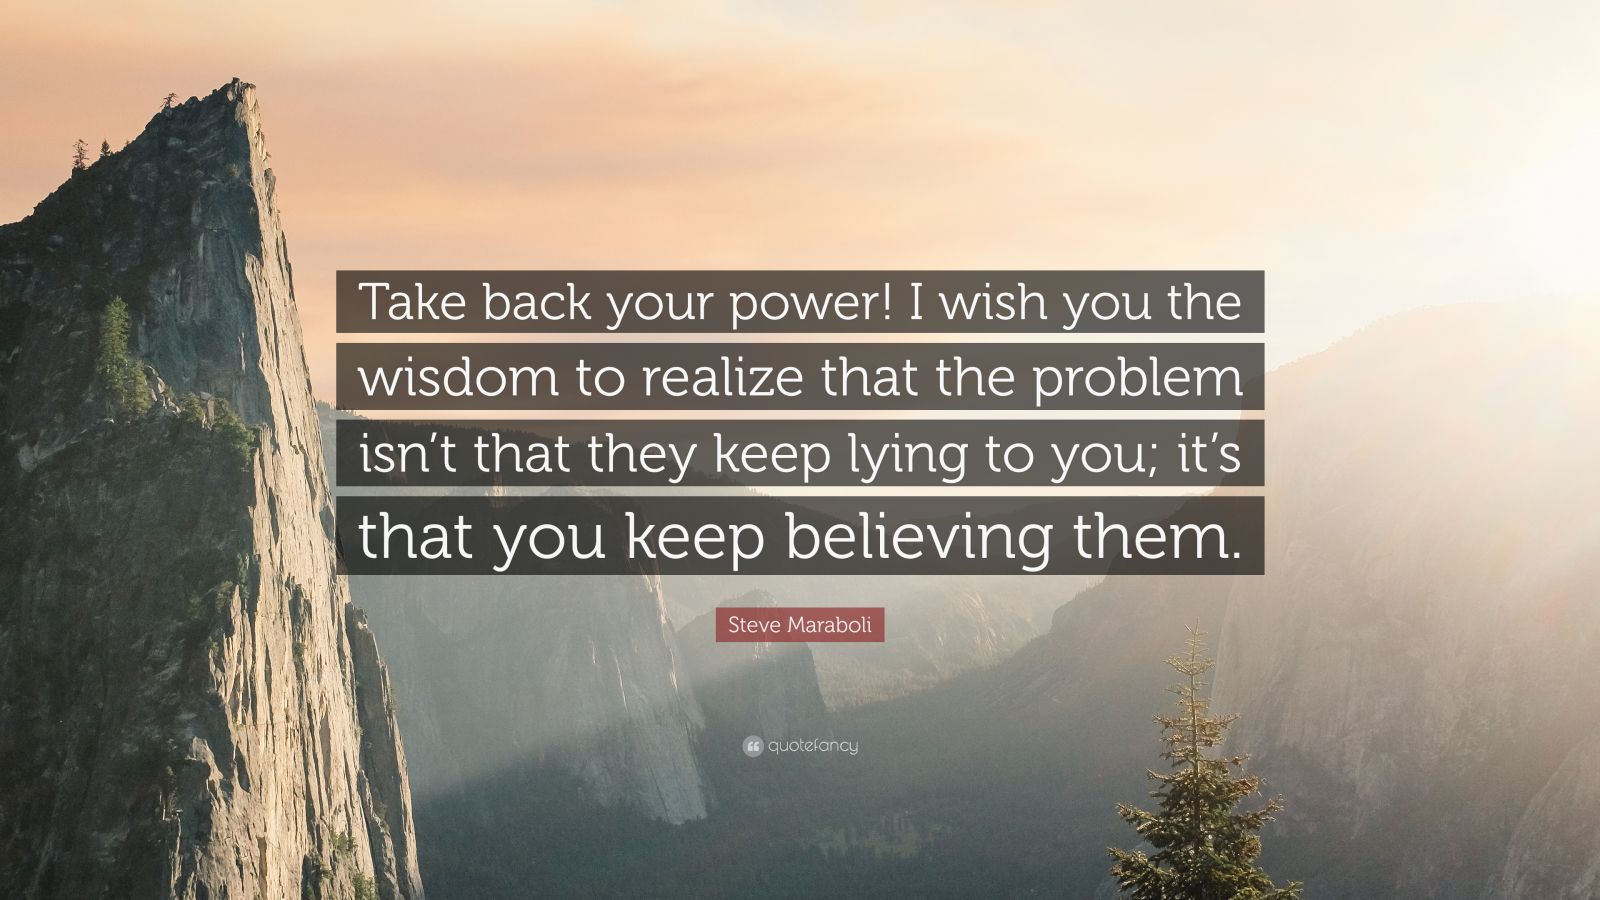 Steve Maraboli Quote: “Take back your power! I wish you the wisdom